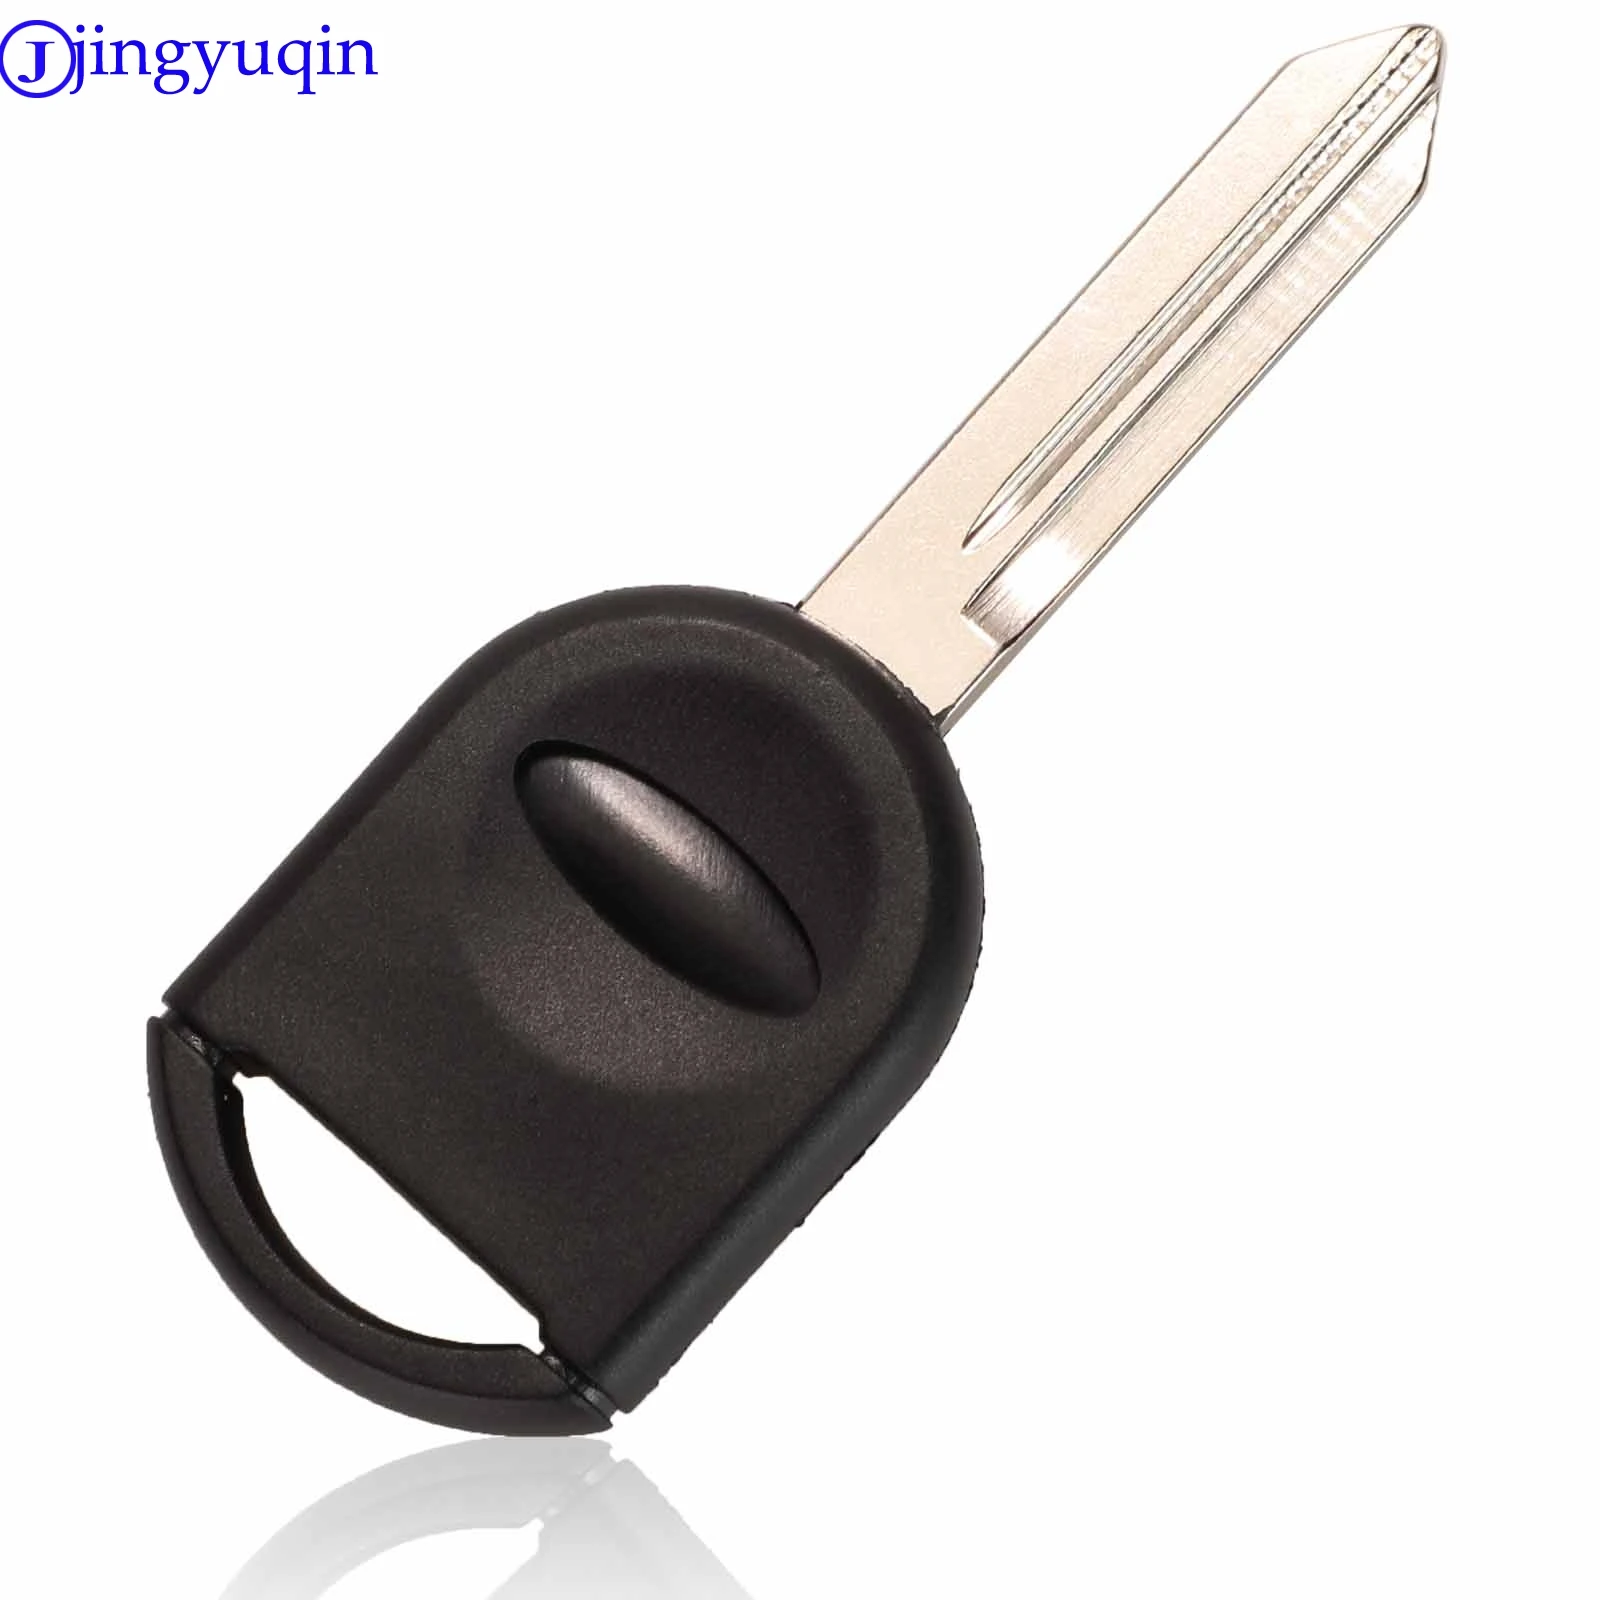 Jingyuqin без чипа автомобильный Стайлинг транспондер ключ Оболочка Чехол для Ford Lincoln Mercury Uncut ключ пустой чехол